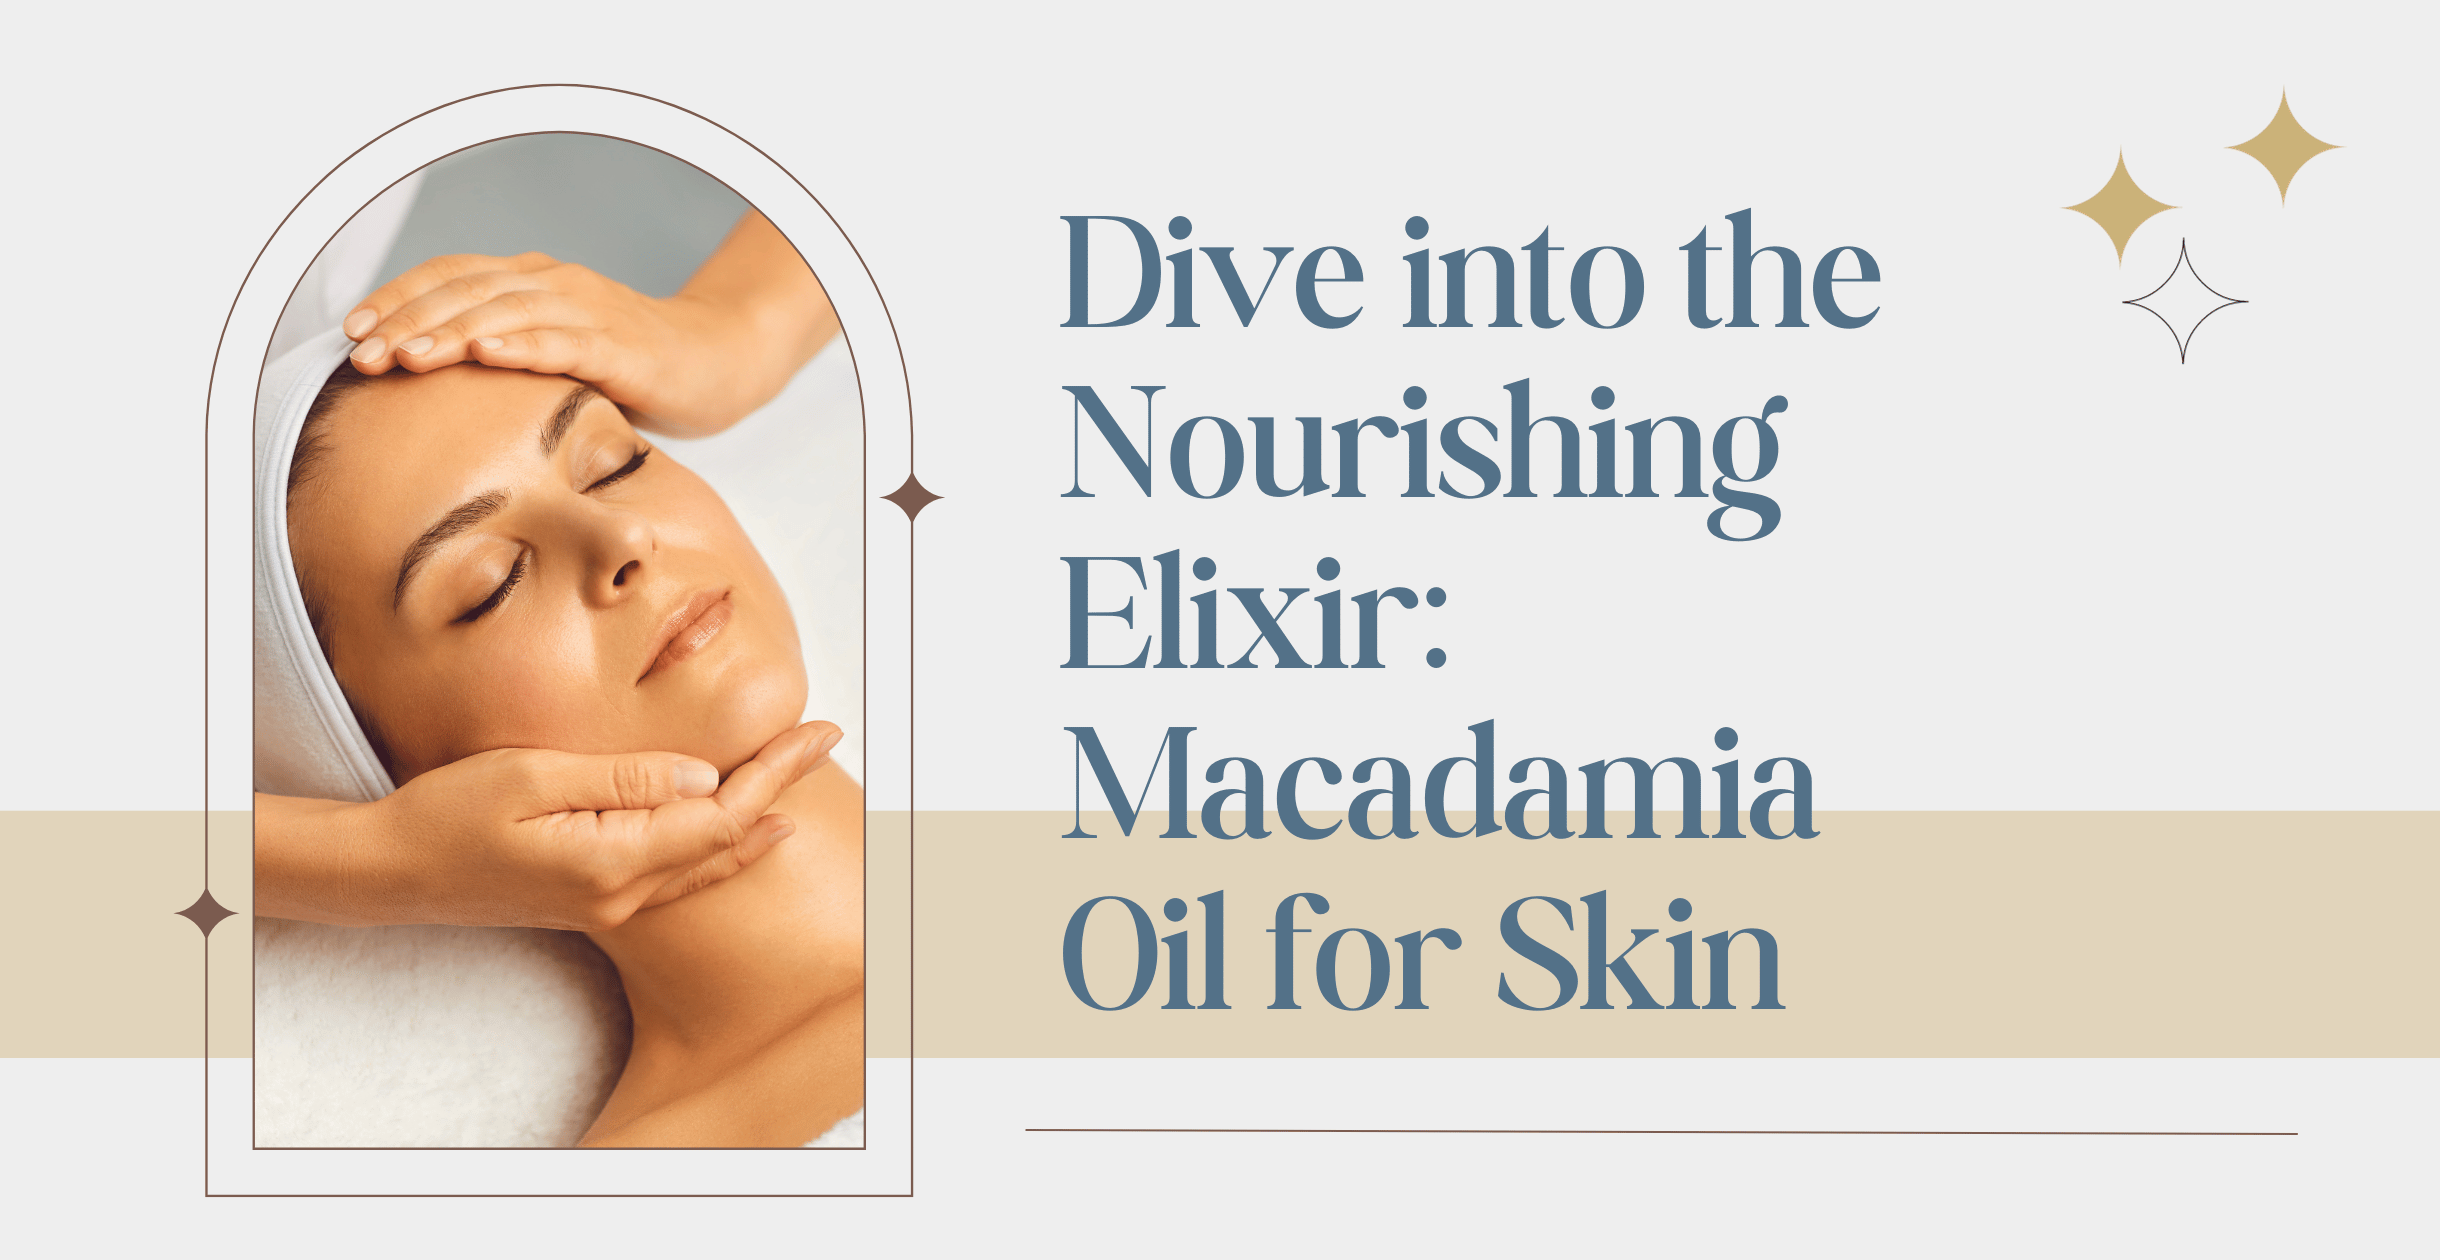 Dive into the Nourishing Elixir: Macadamia Oil for Skin